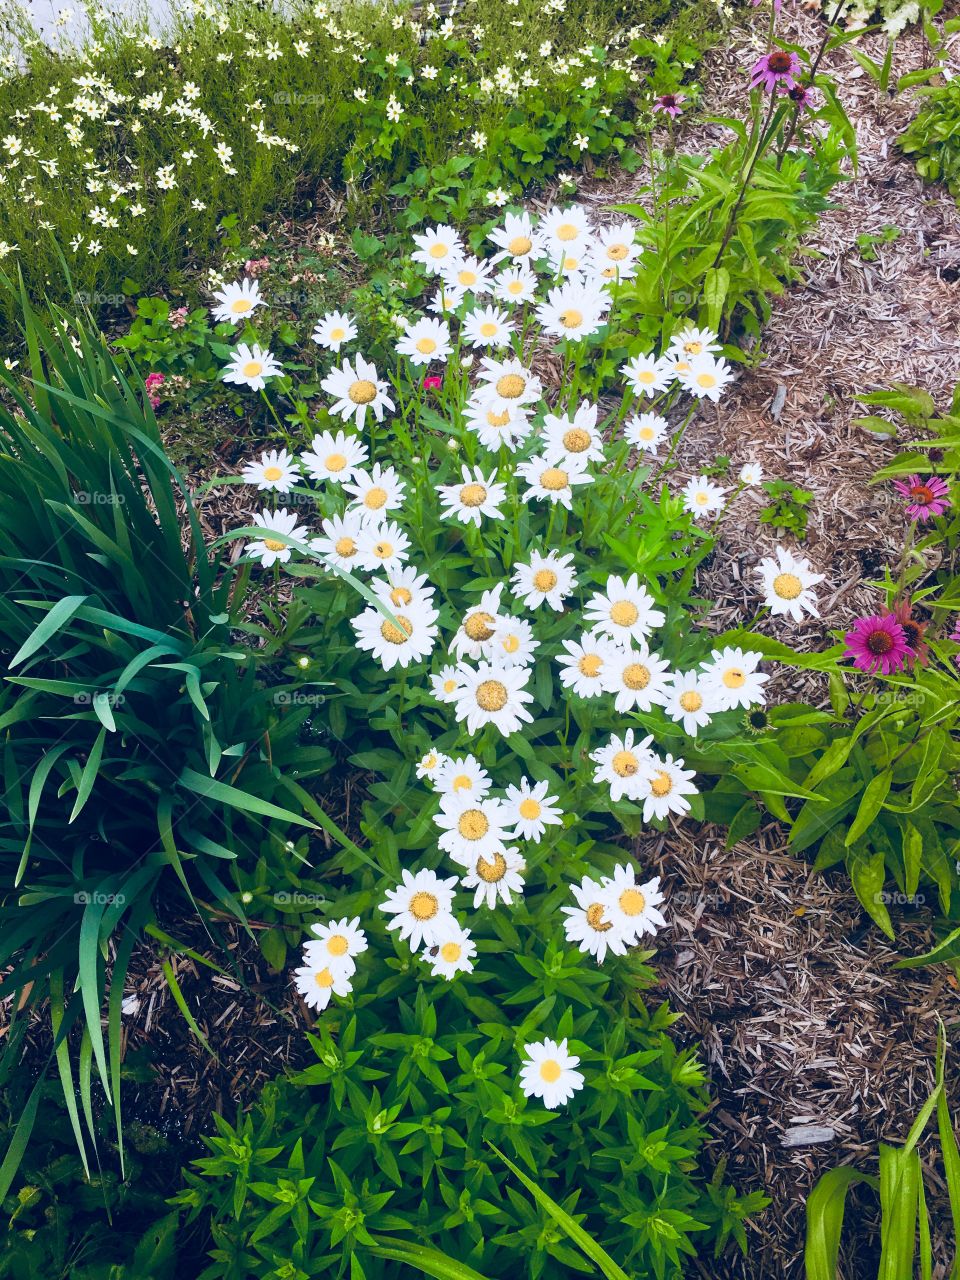 Many tiny white flowers